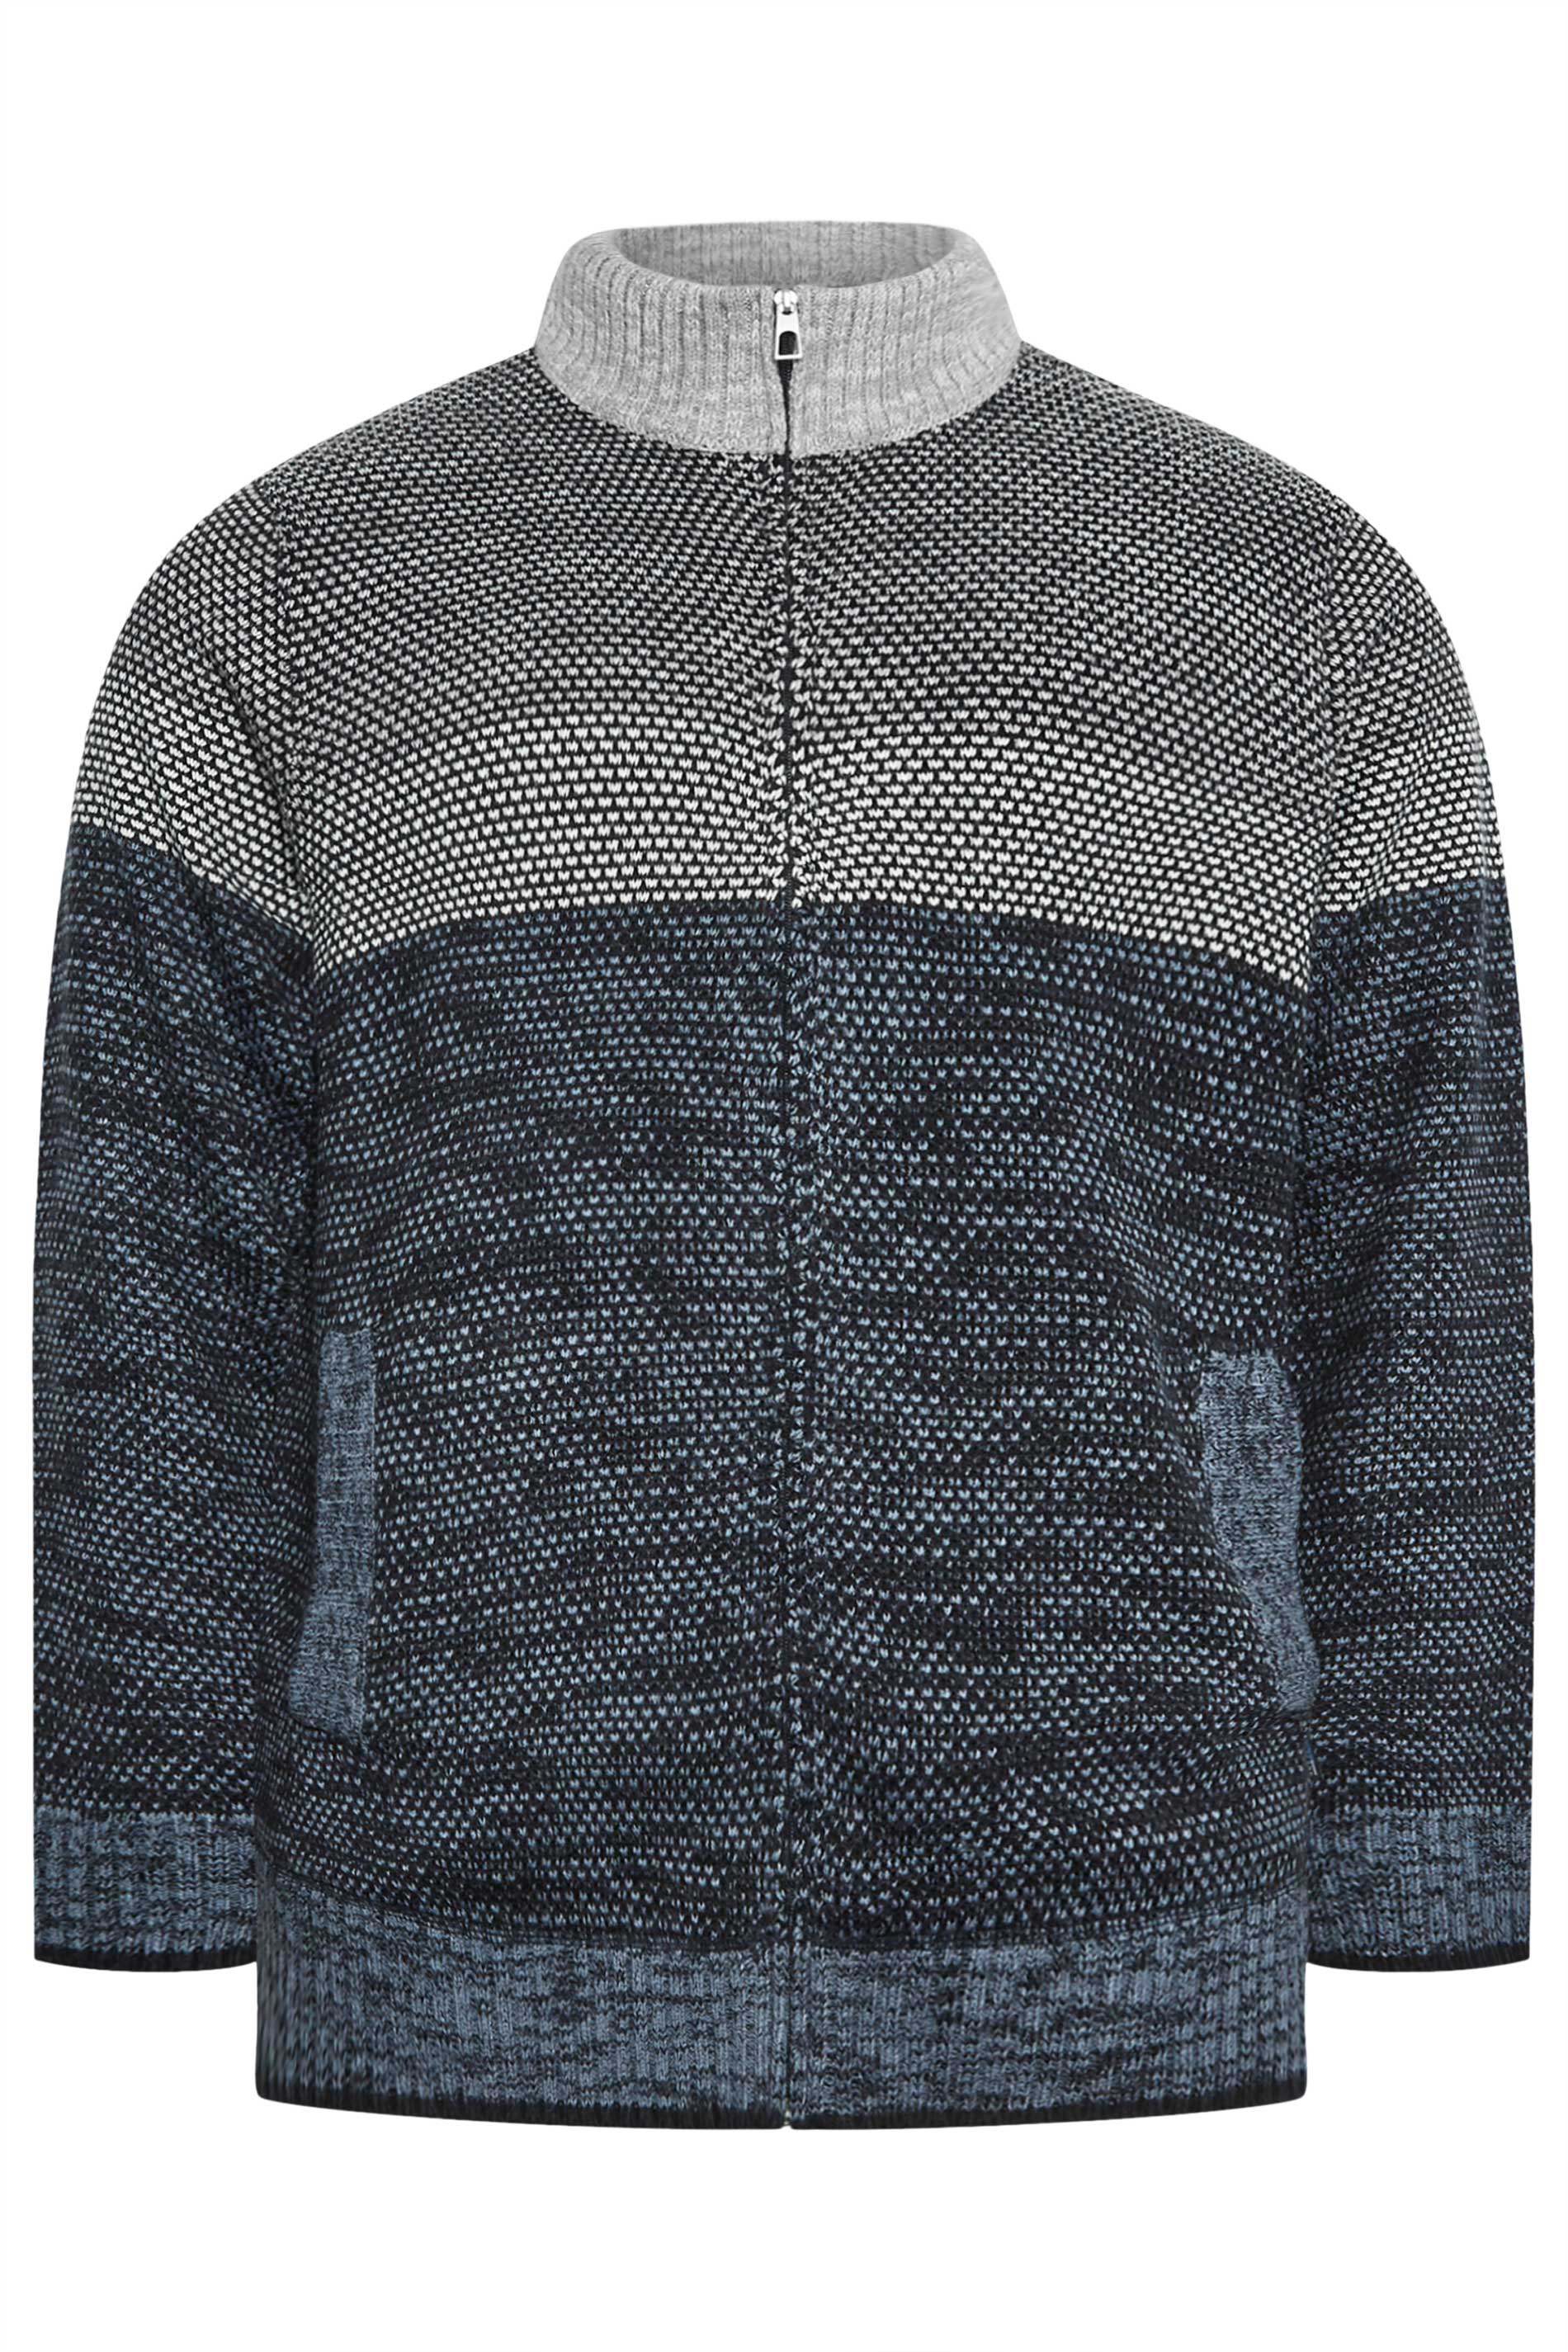 BadRhino Big & Tall Blue Full Zip Fleece Lined Knitted Jumper | BadRhino